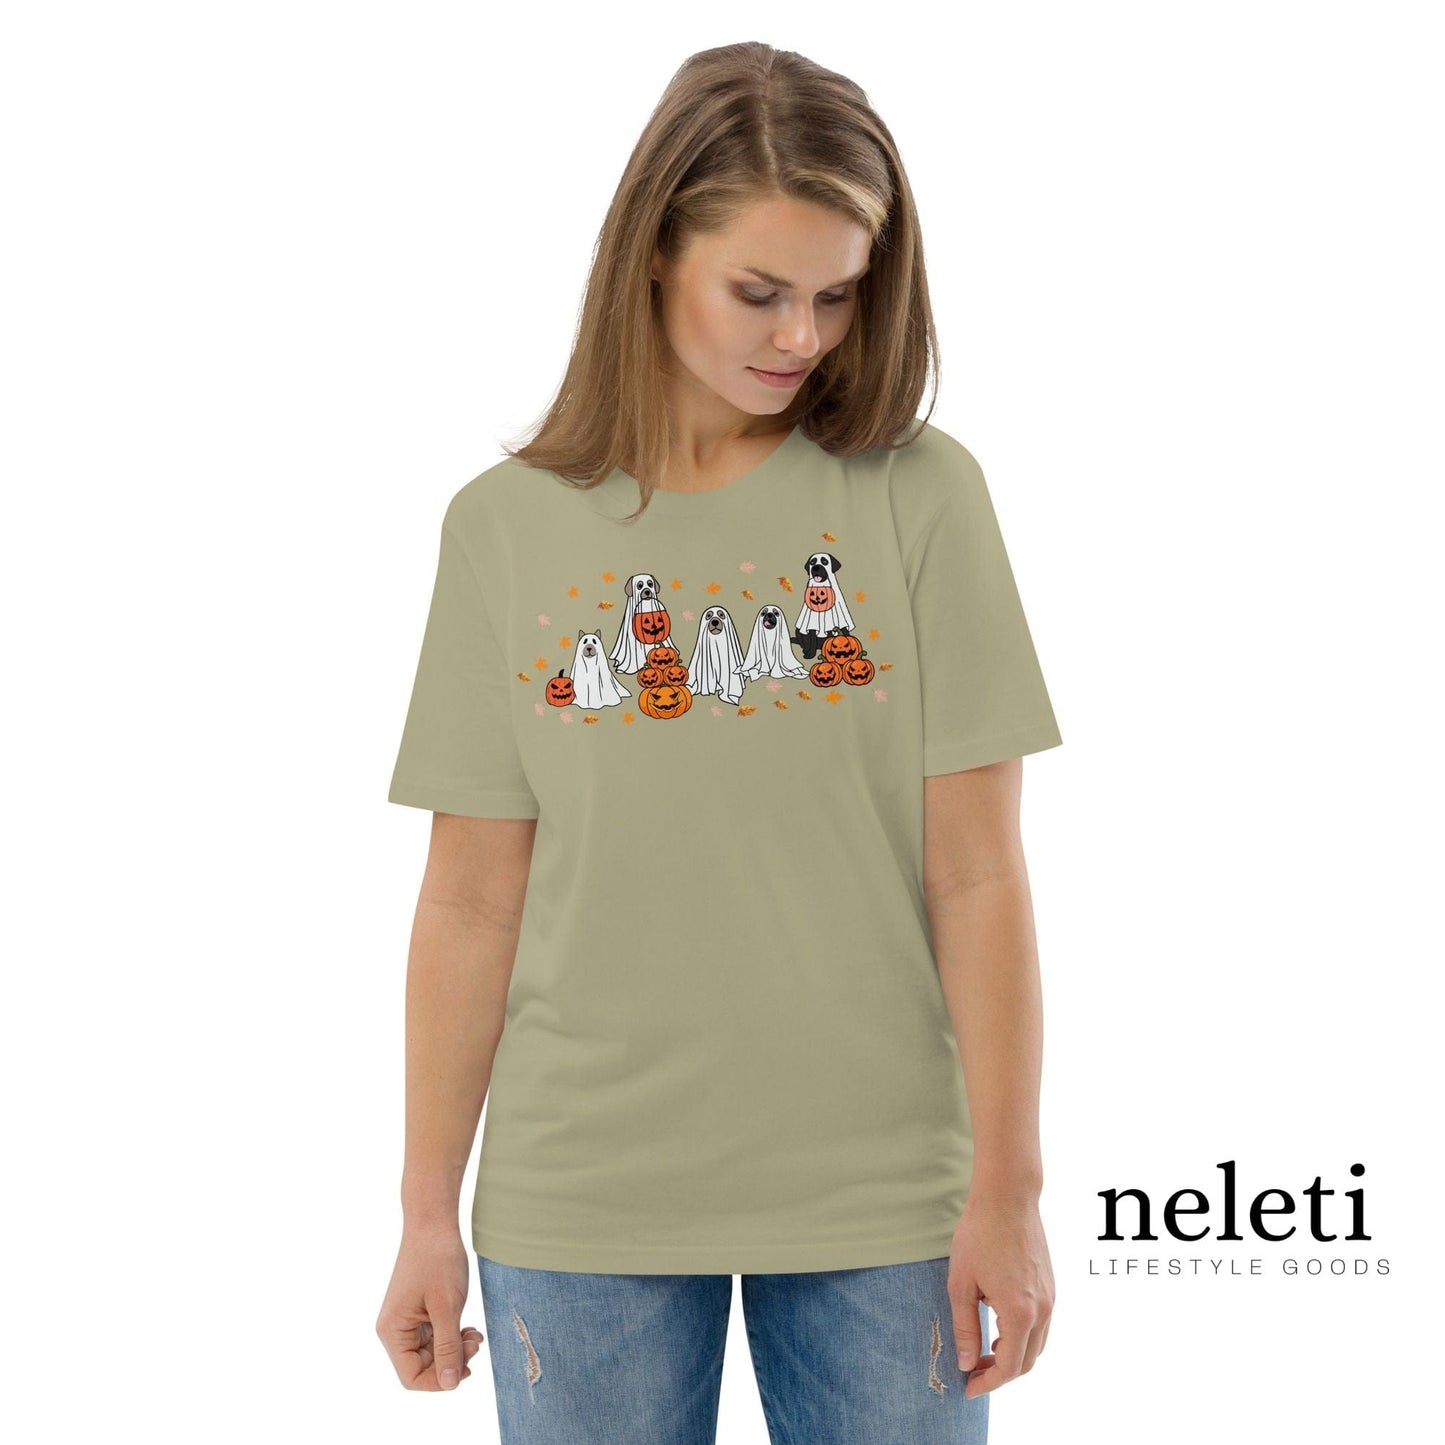 neleti.com-haloween-olive-shirt-for-dog-lovers